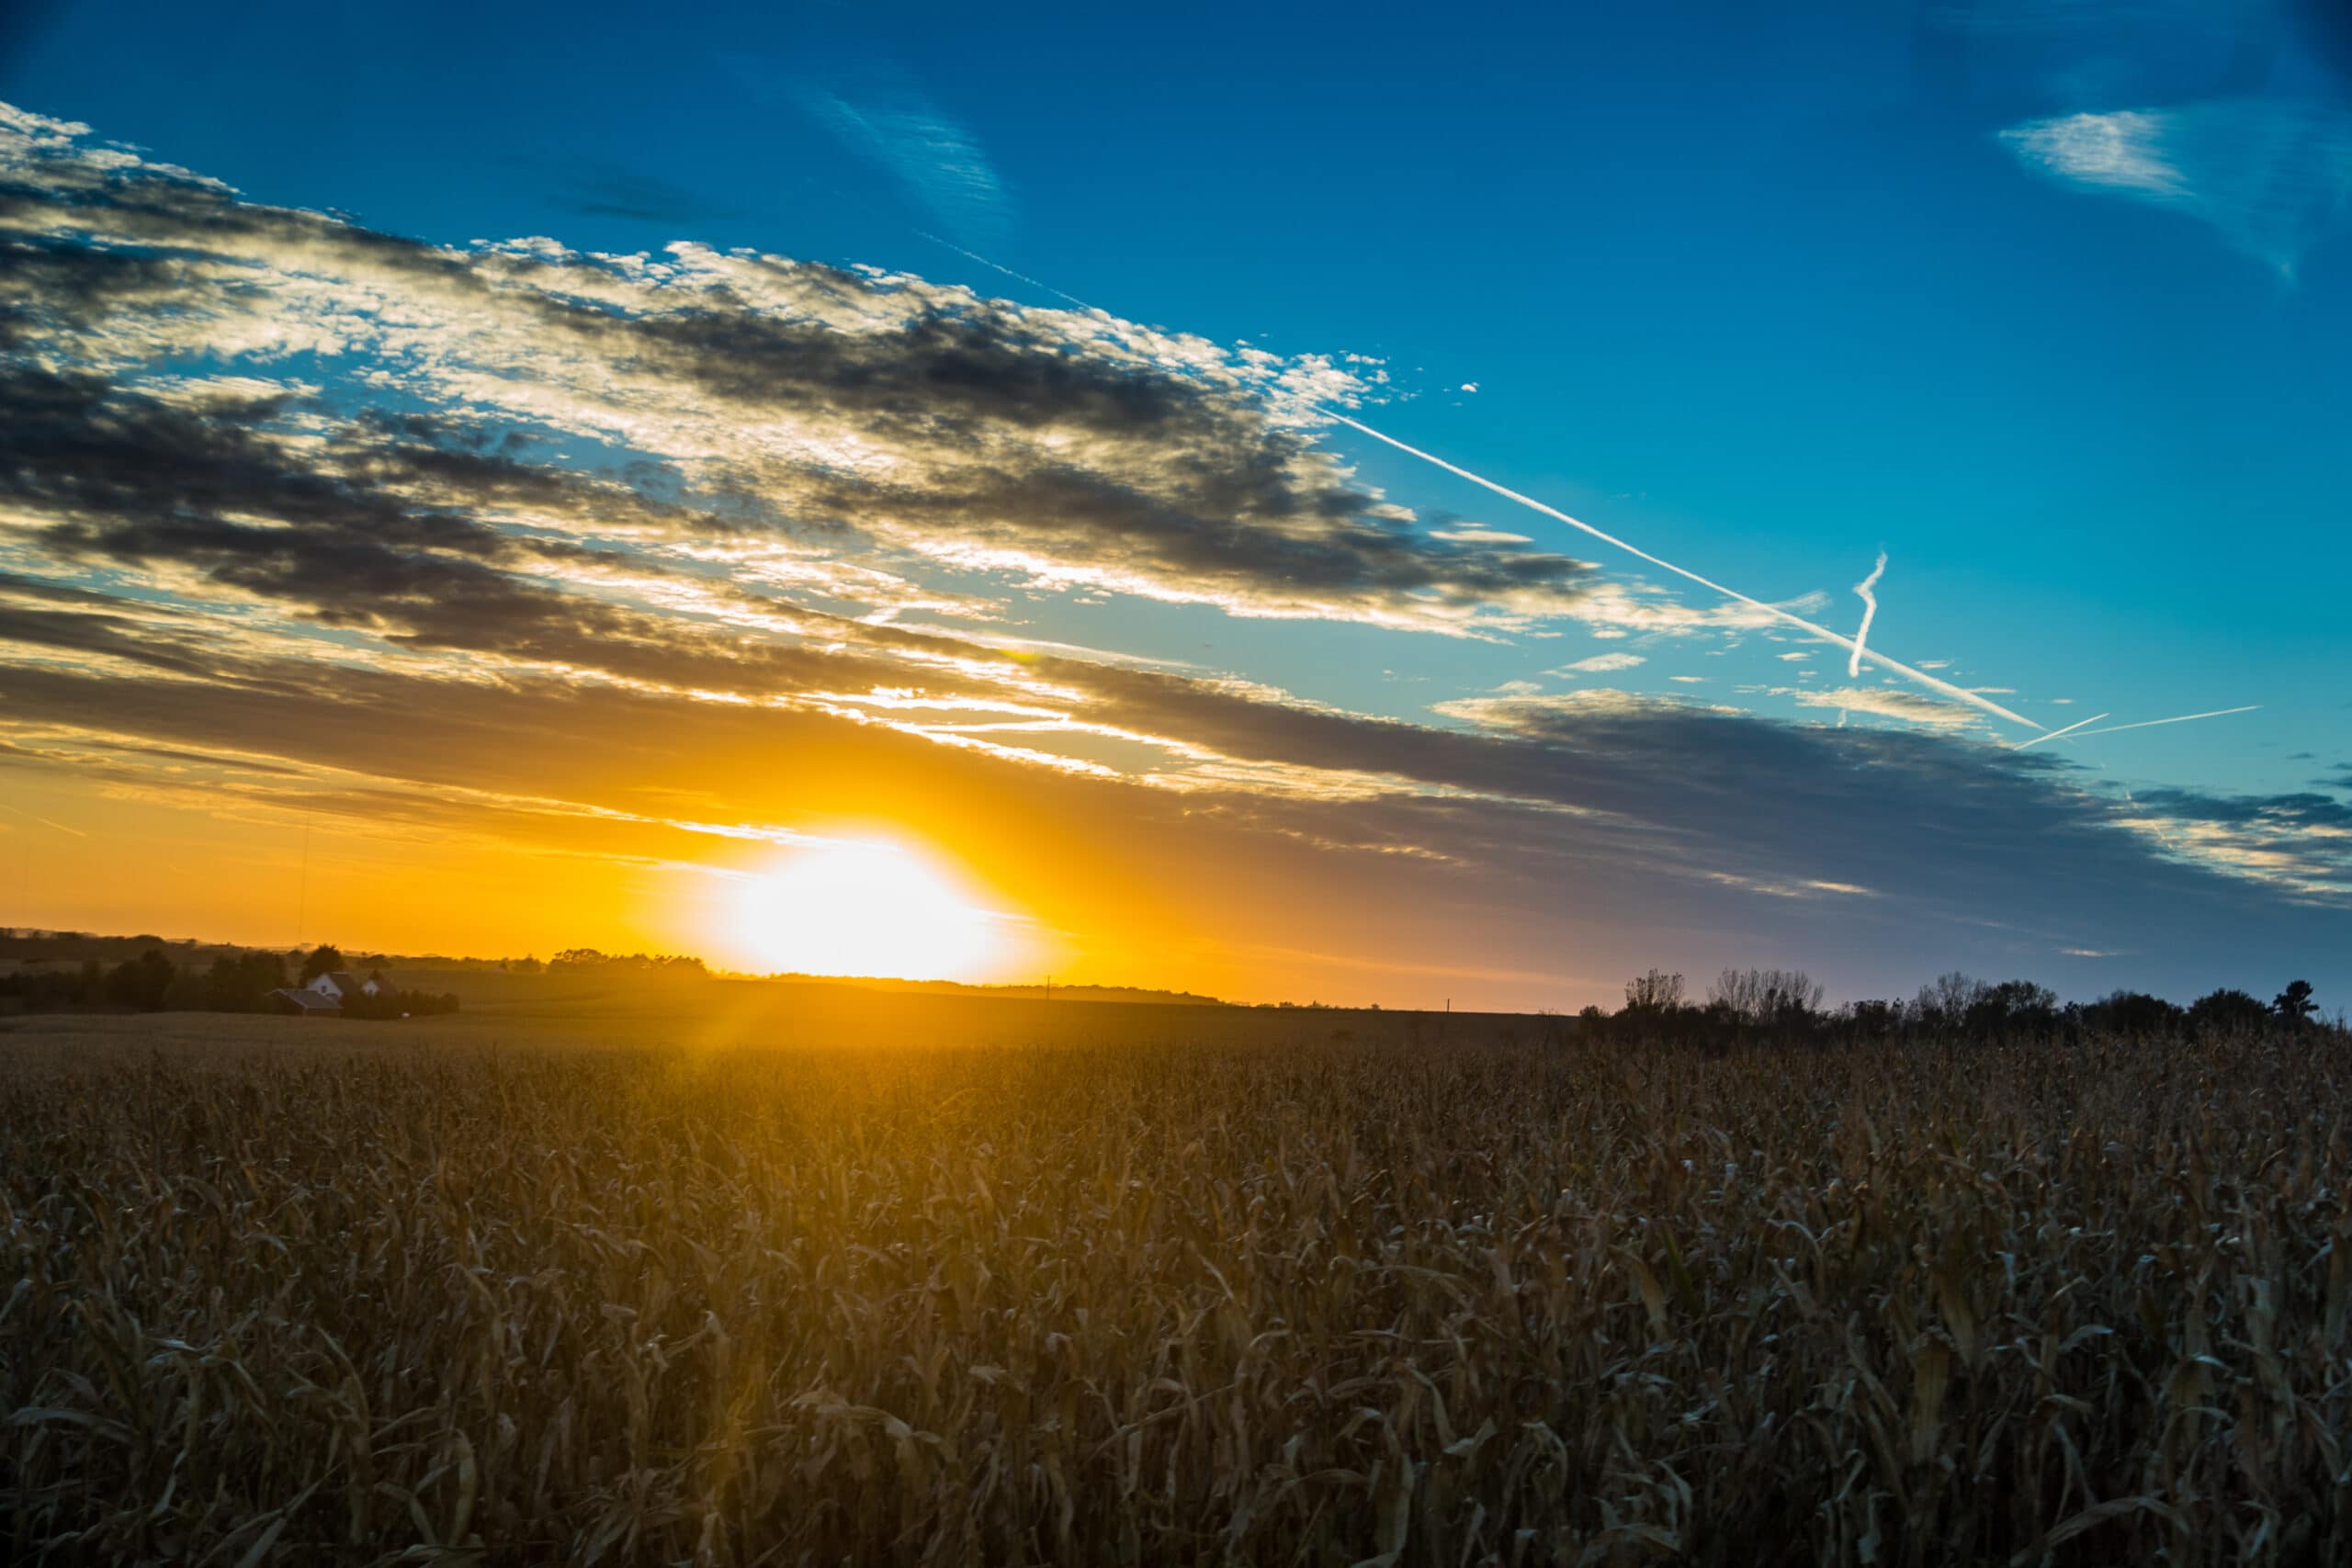 a sun setting over a corn field.